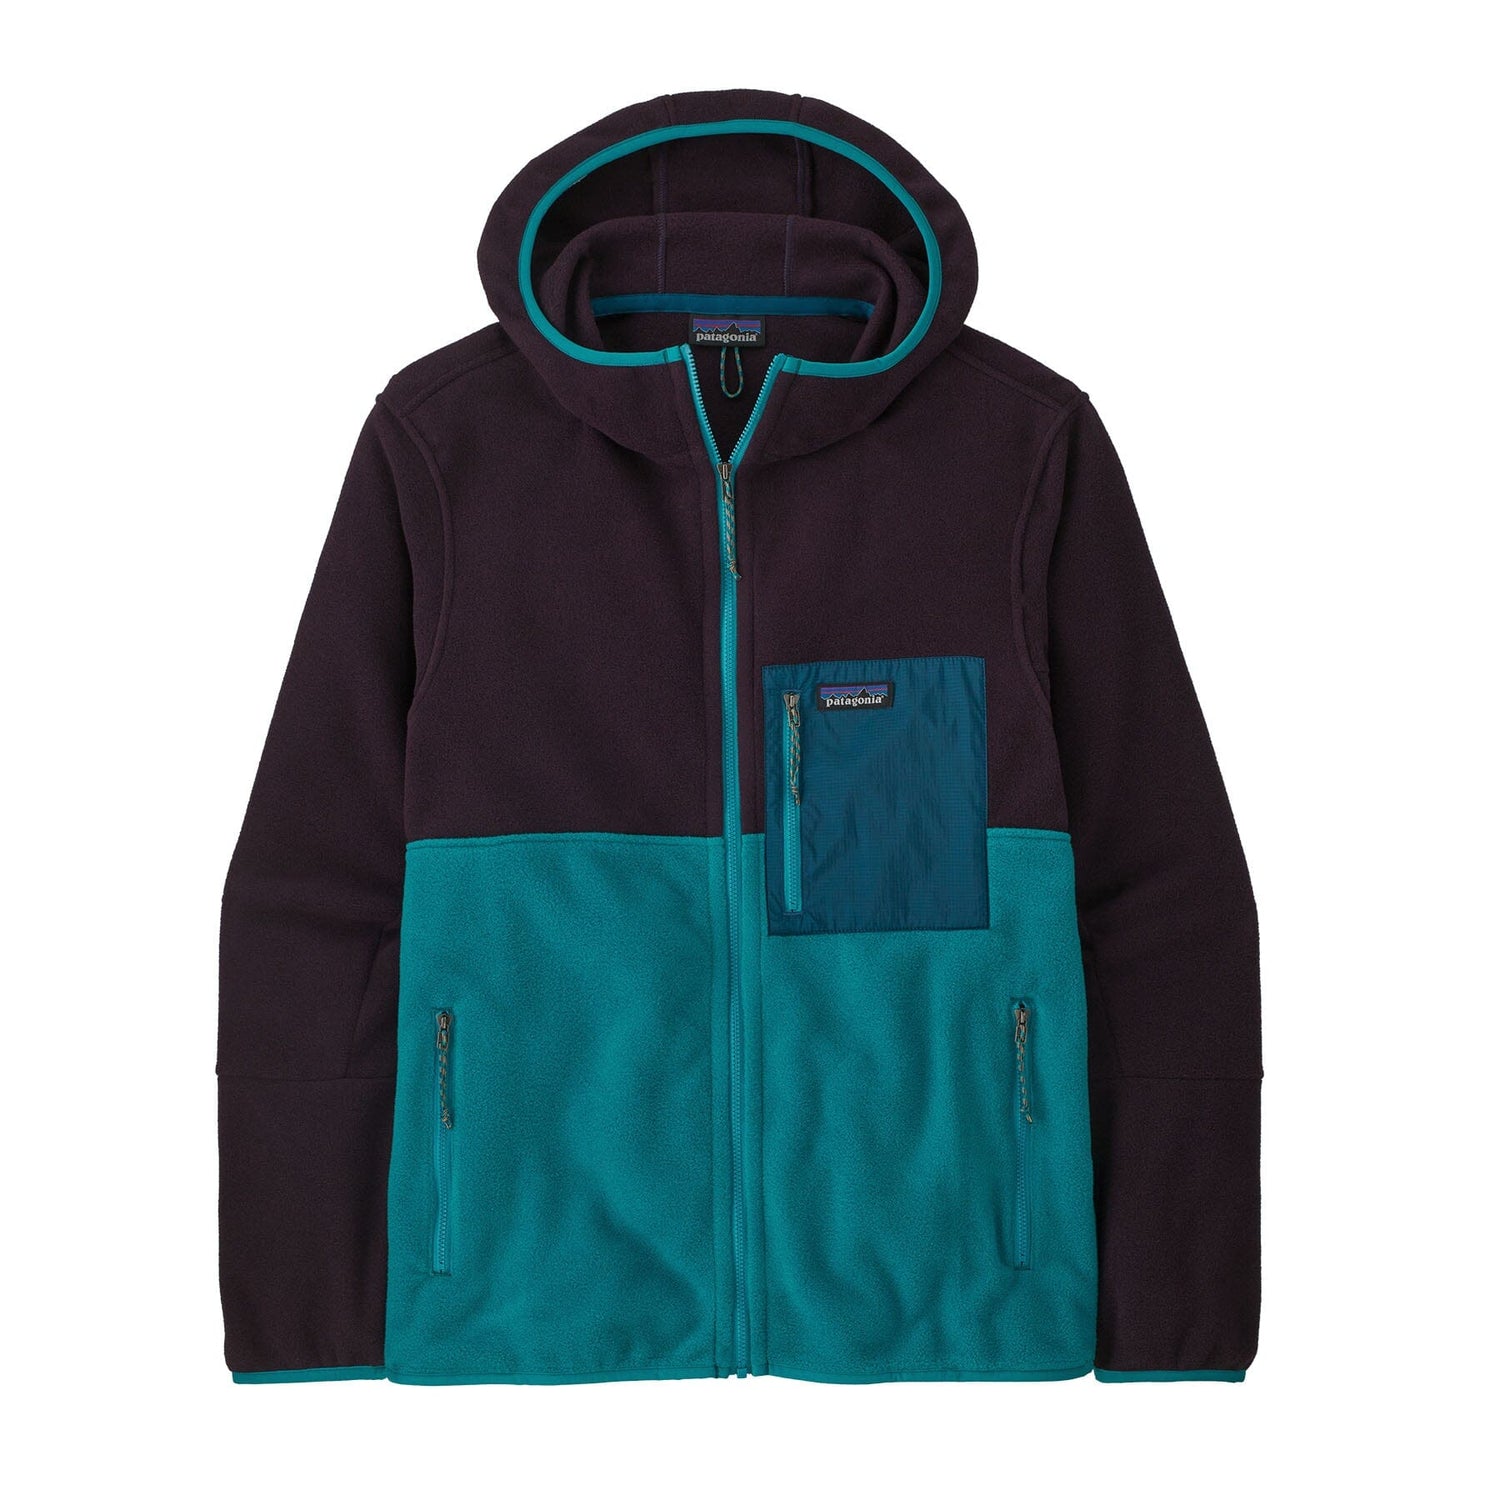 Patagonia - M's Microdini Fleece Hoody - 100% recycled polyester - Weekendbee - sustainable sportswear